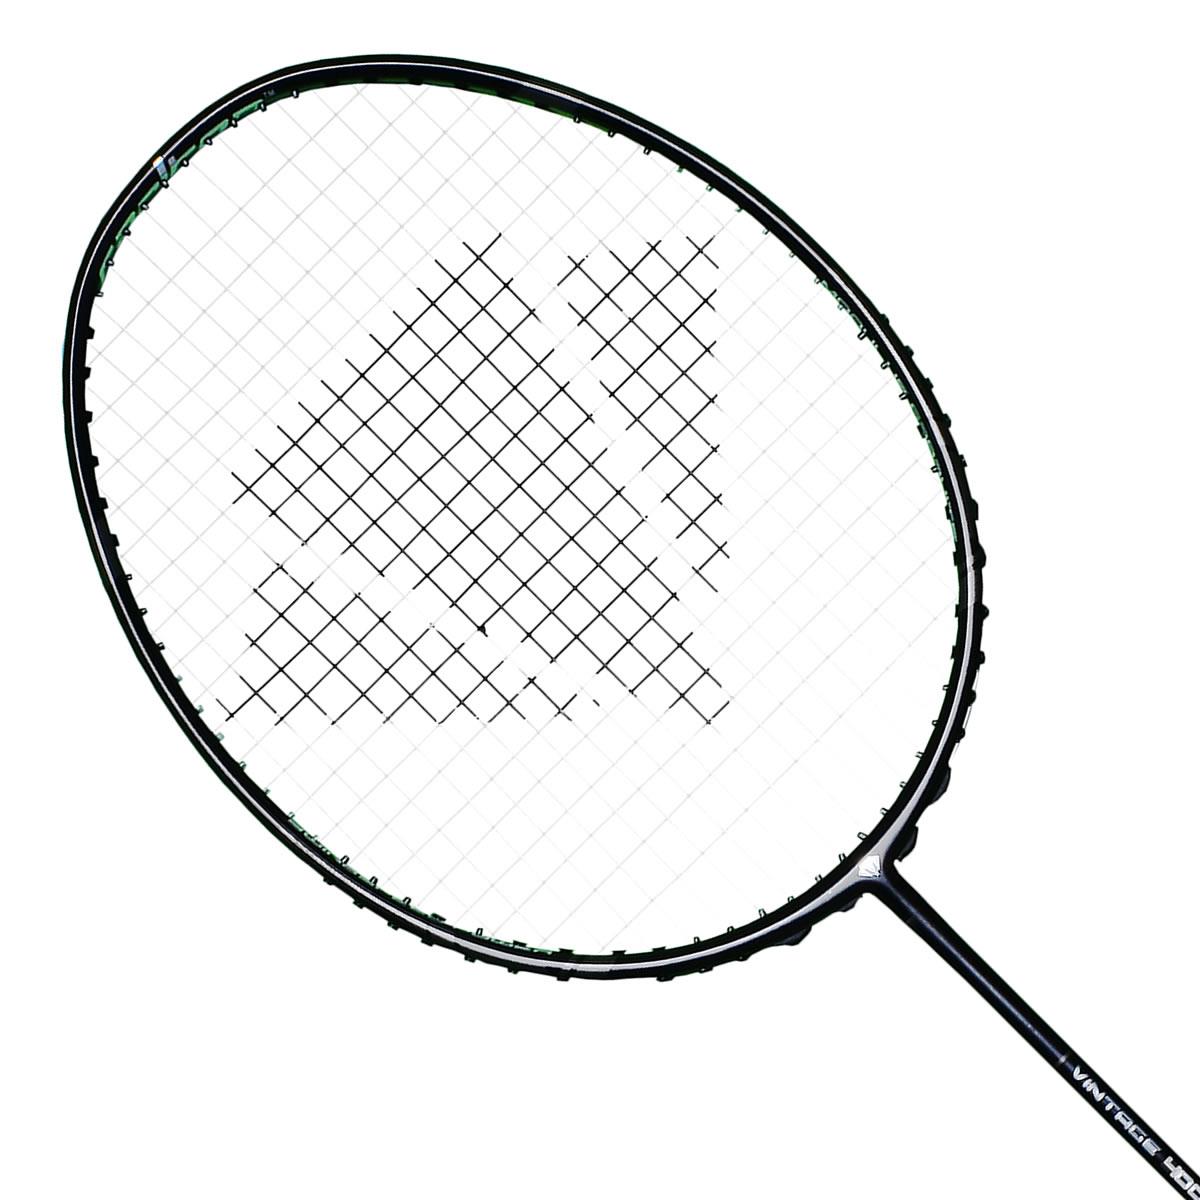 Carlton Vintage 400 Badminton Racket